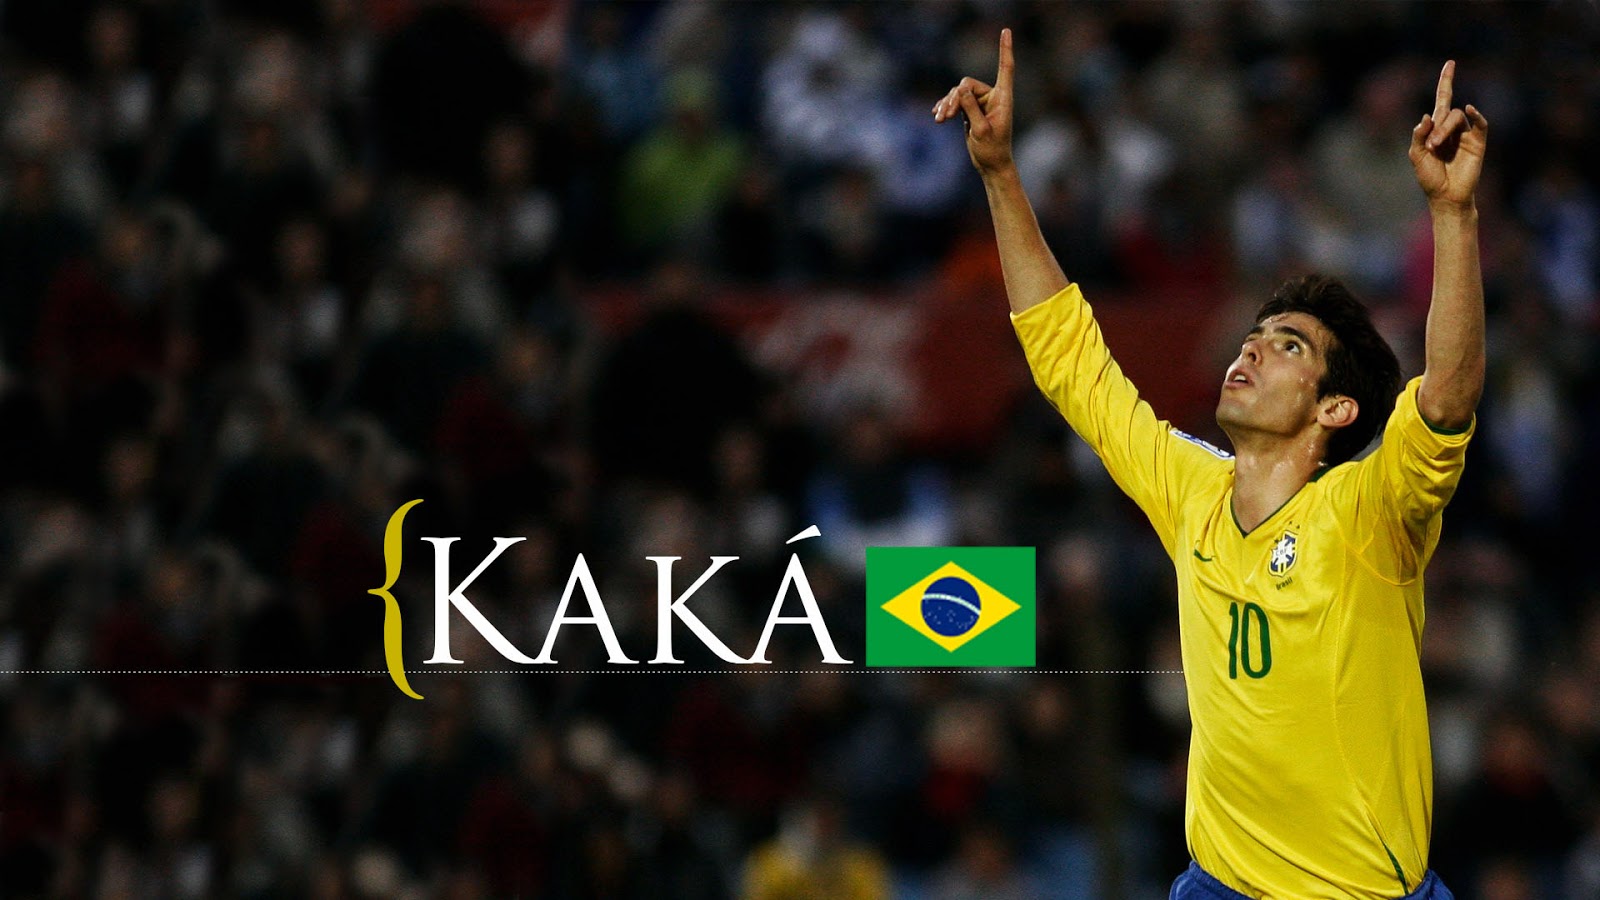 Ricardo Kaka Handsome Football Player HD Wallpaper